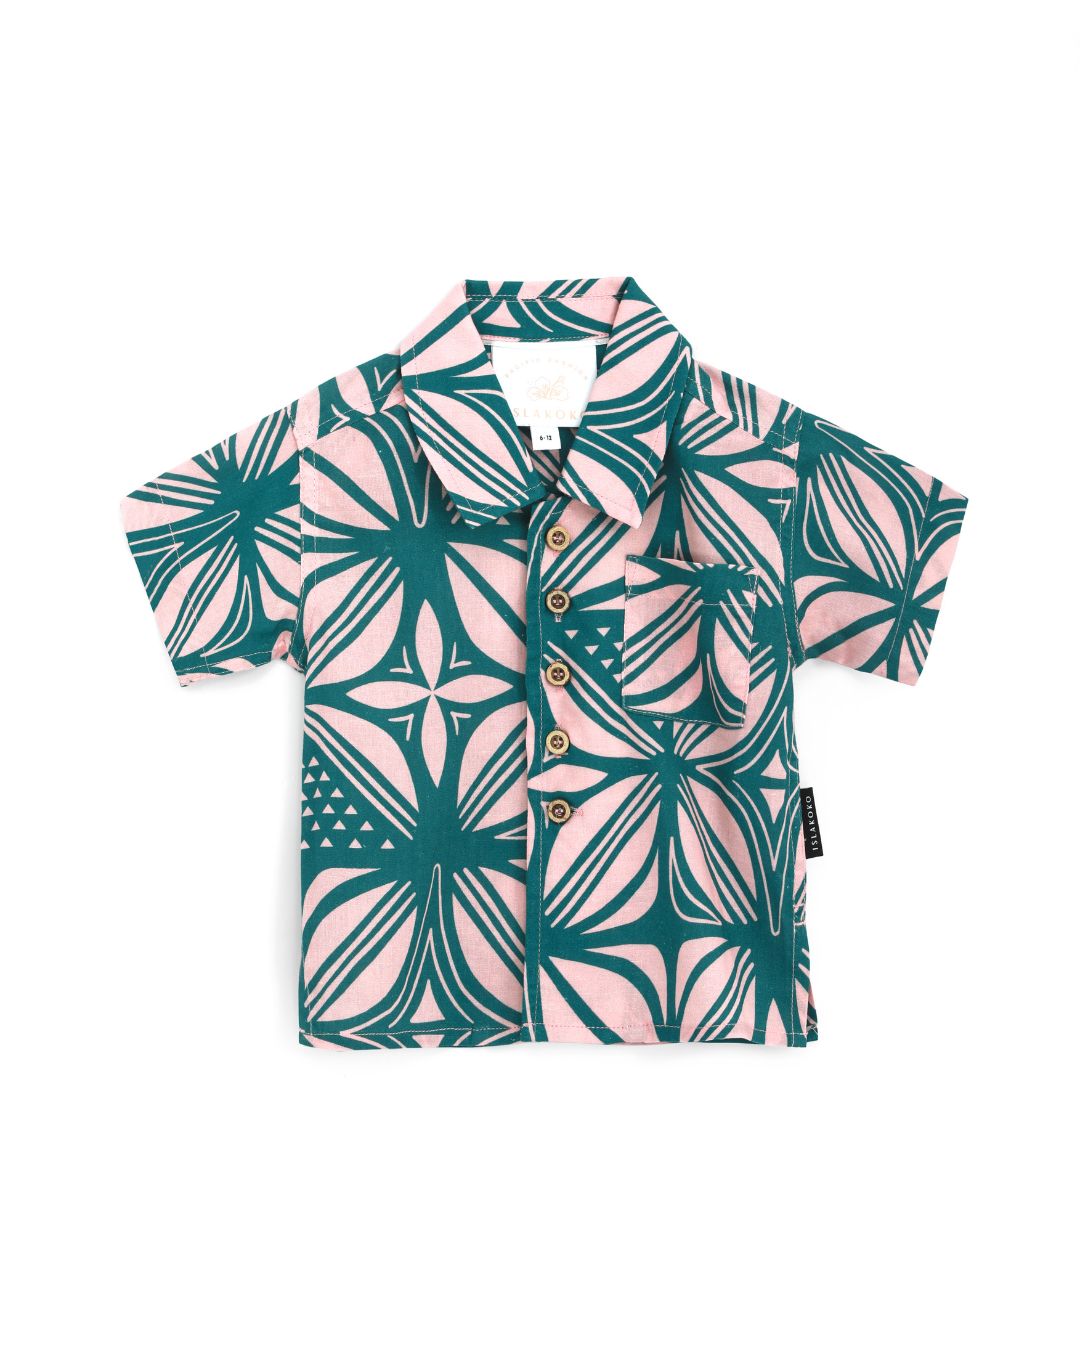 Kanoa Teen Short Sleeve Island Shirt - Pacific Floral Peach - Front